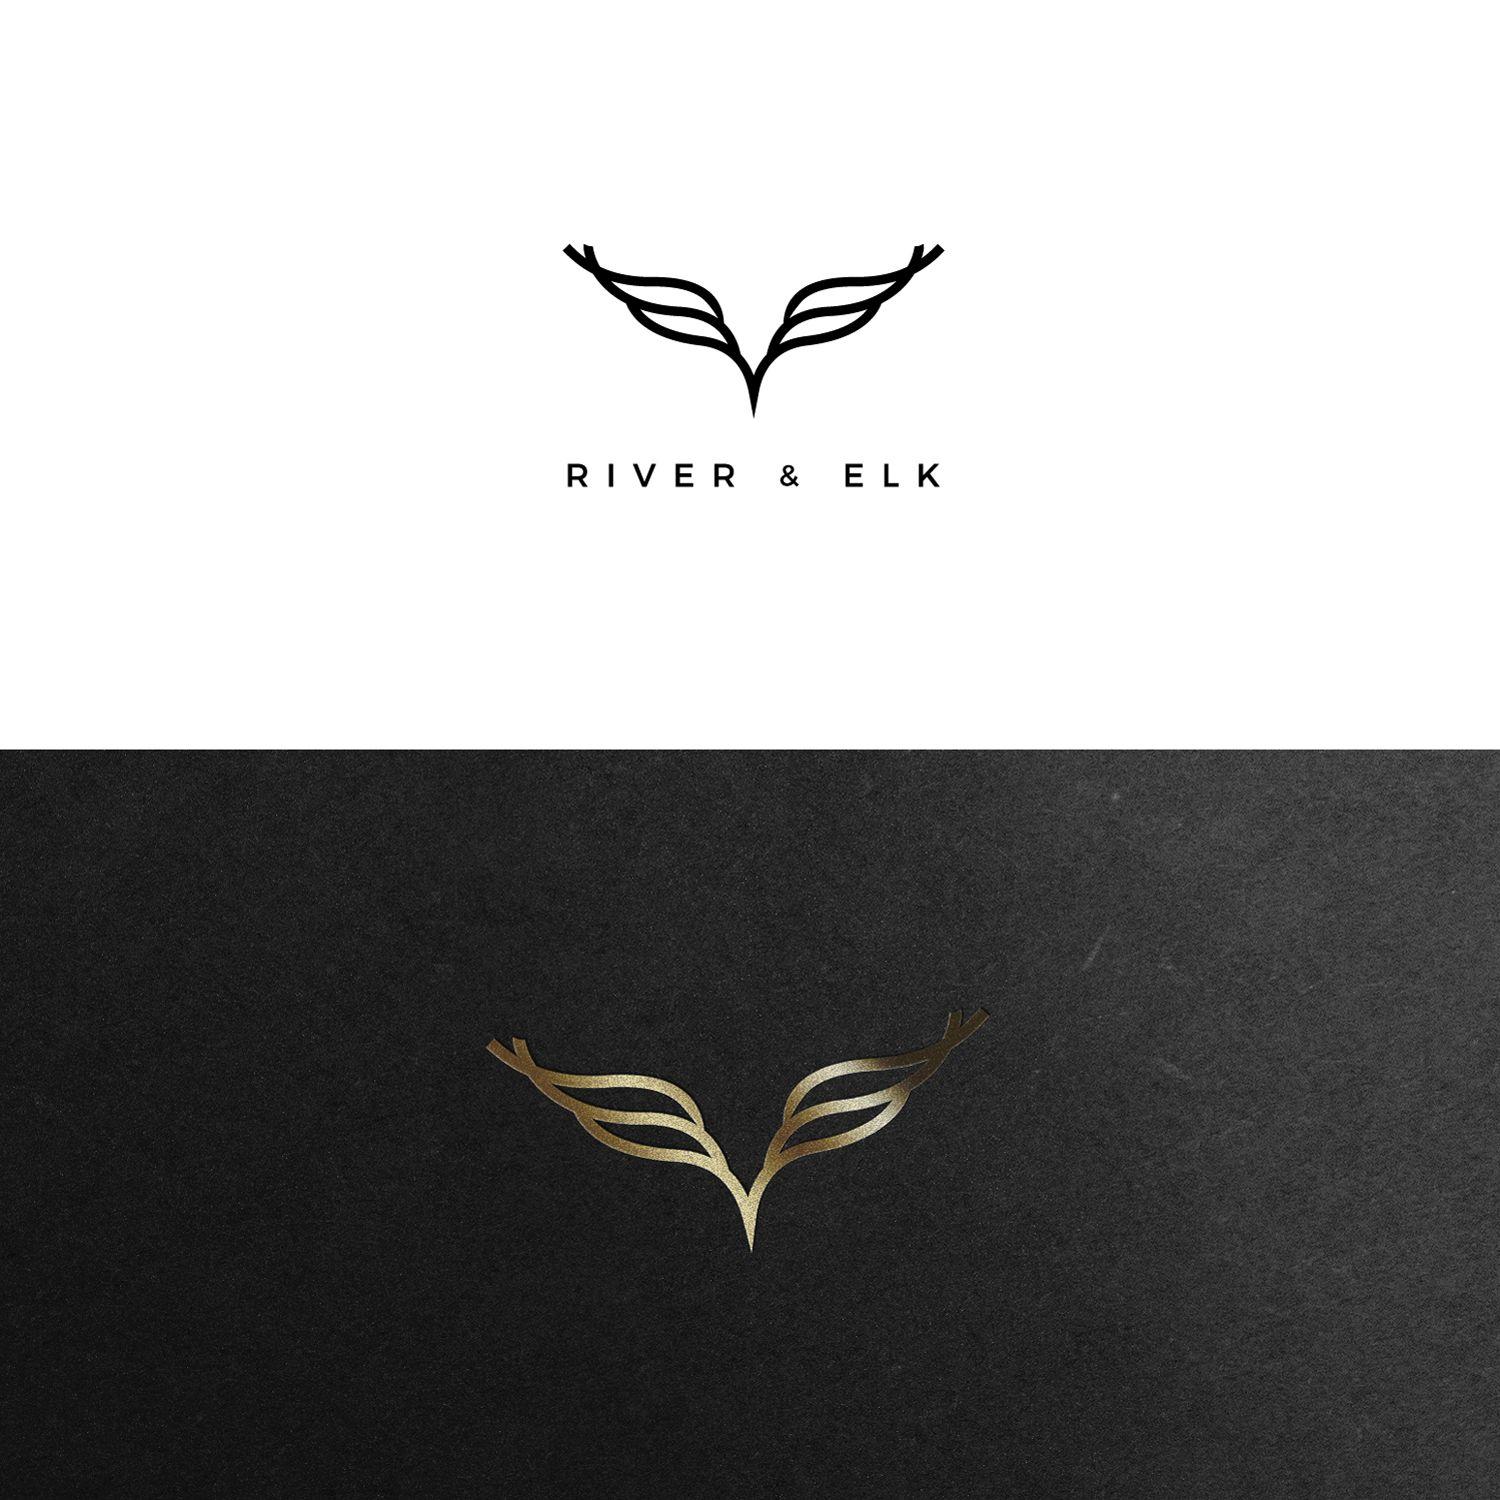 River Bird Logo - Upmarket, Serious, Home Furnishing Logo Design for RIVER & ELK by ...